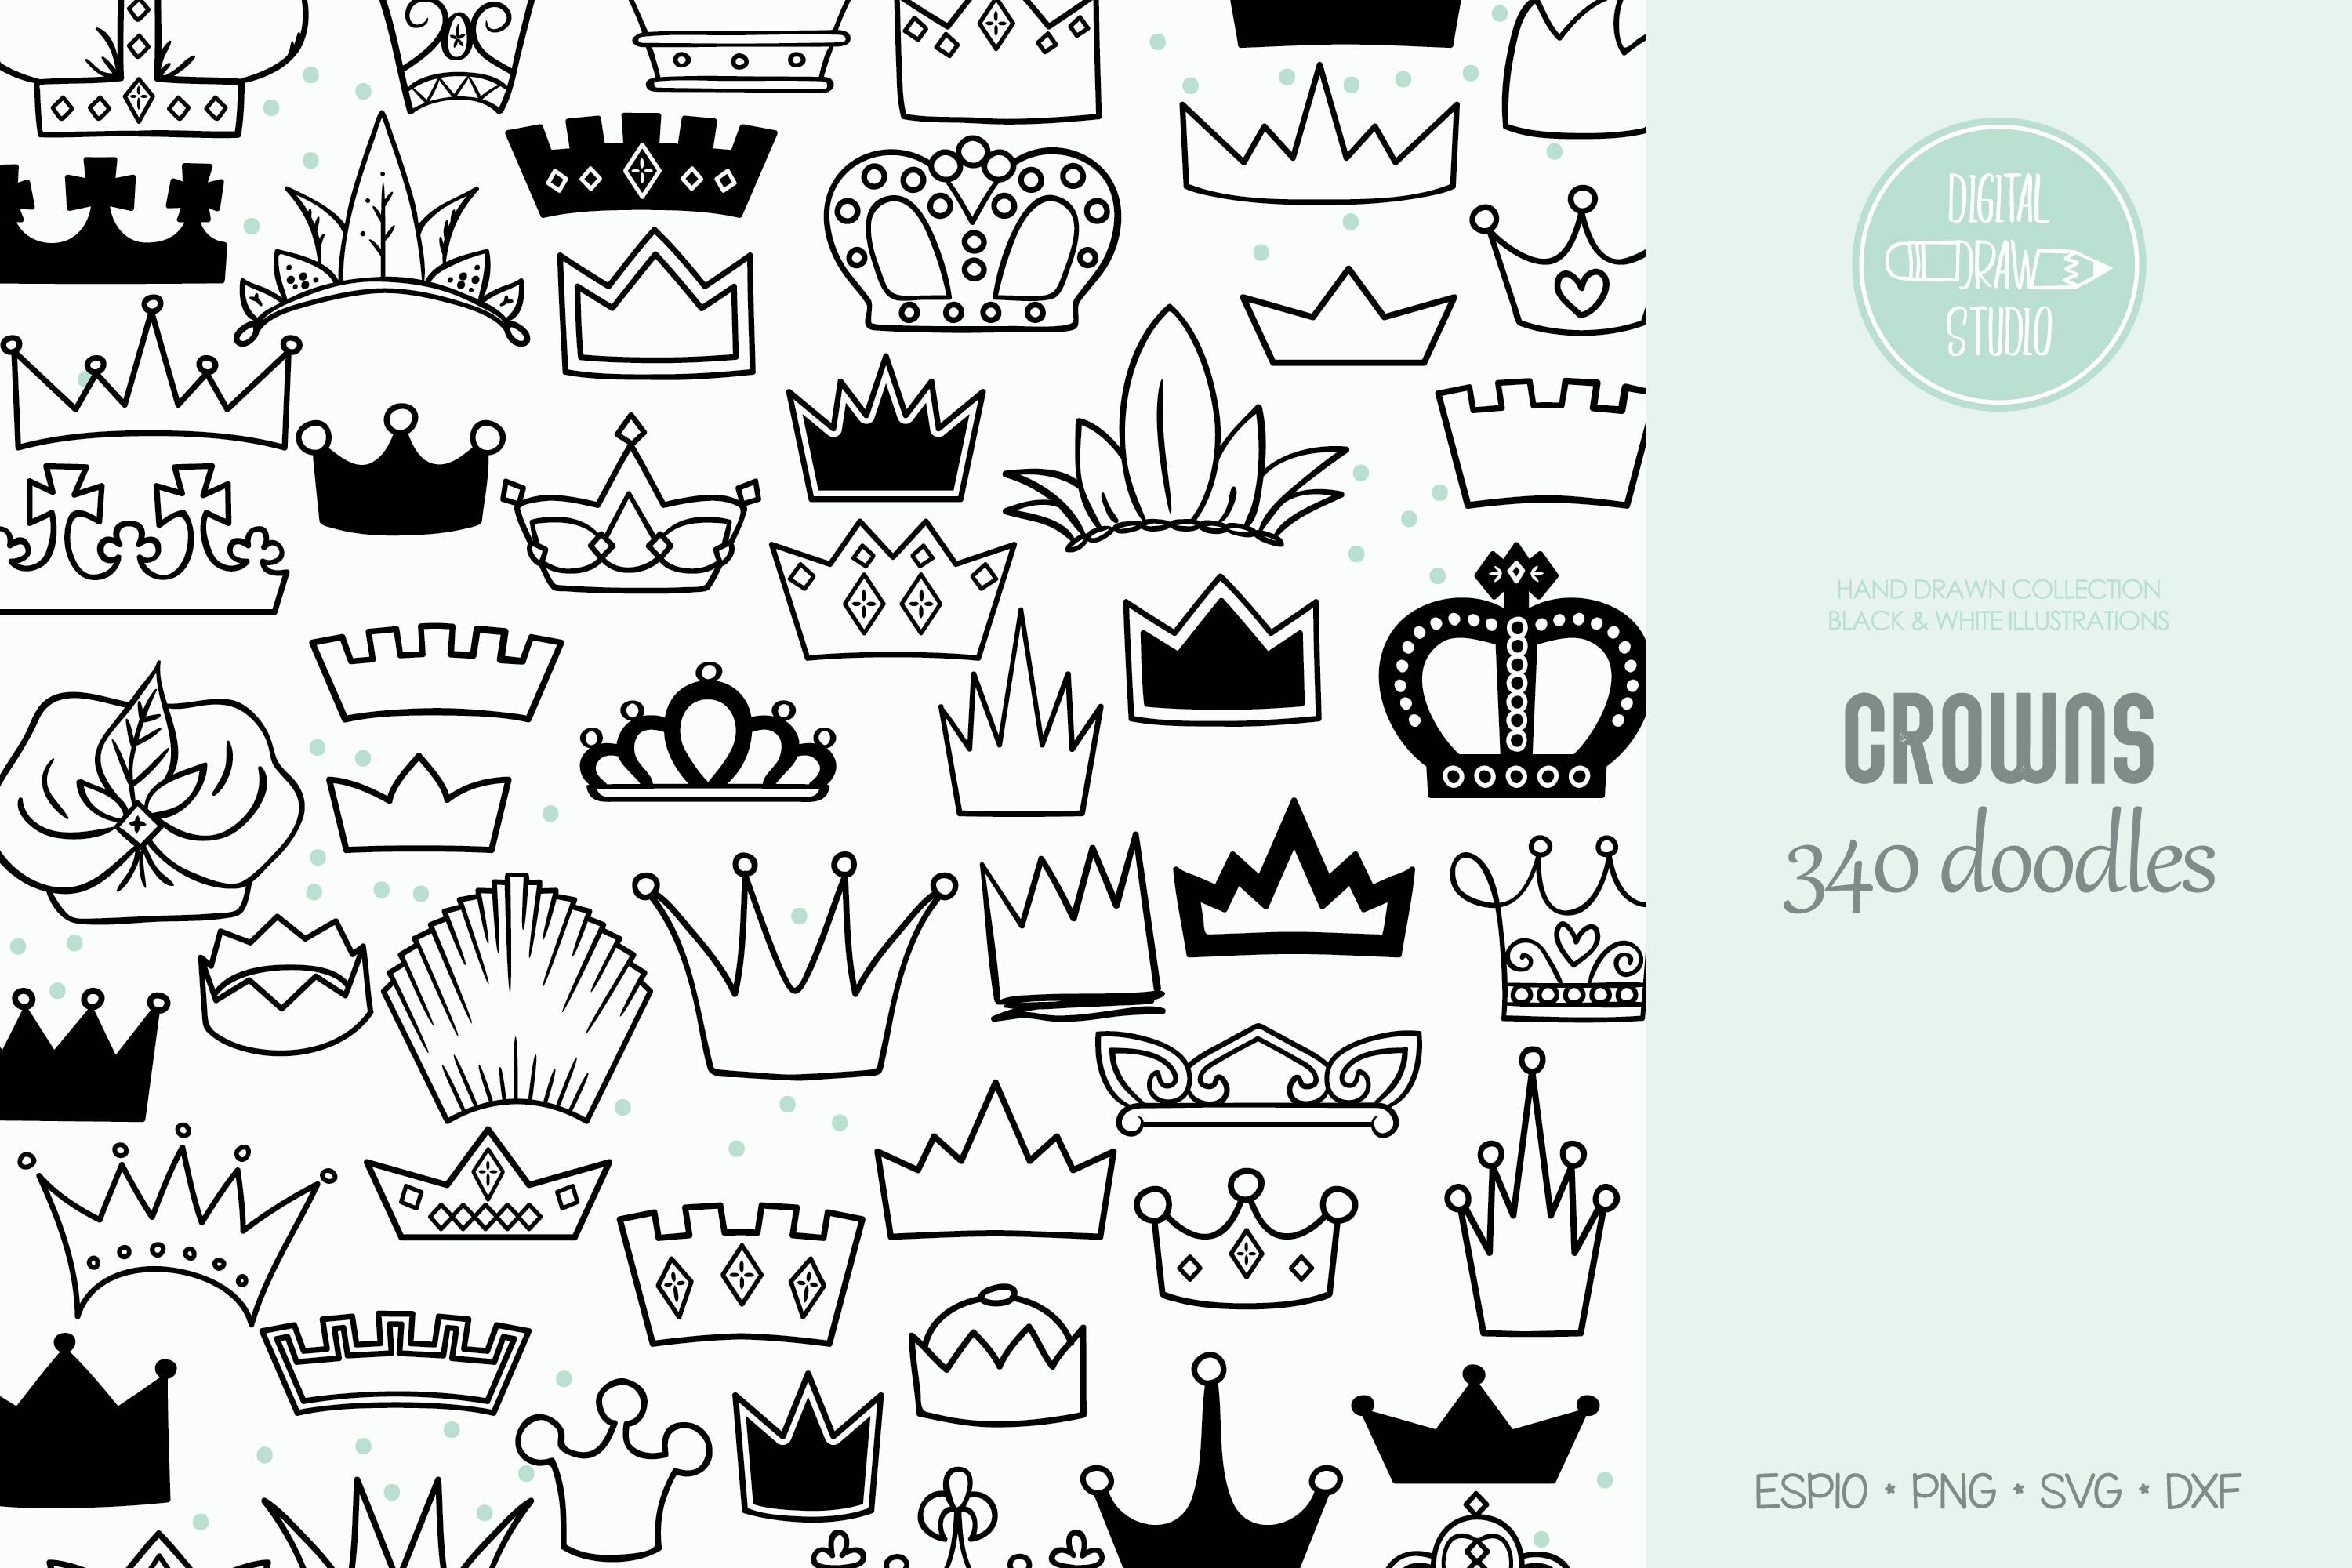 Crowns Princess Tiara King Queen Royal Illustrations By Digital Draw Studio Thehungryjpeg Com